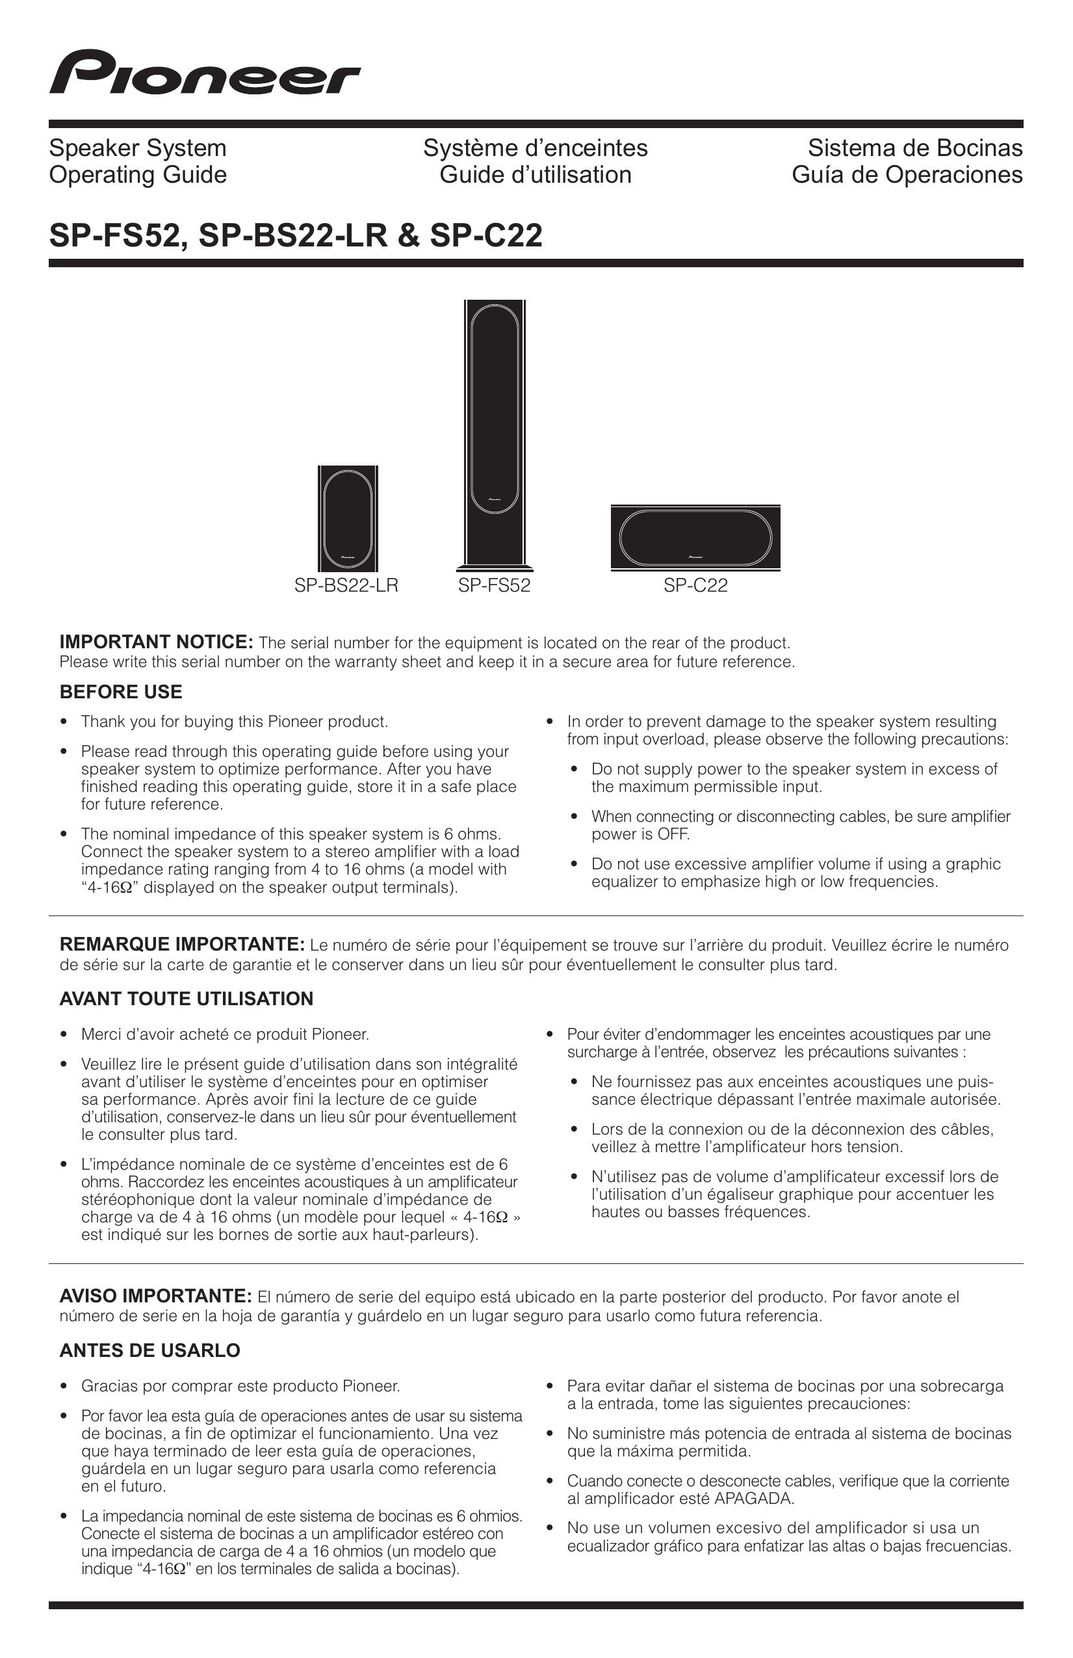 Pioneer SP-FS52 Car Speaker User Manual